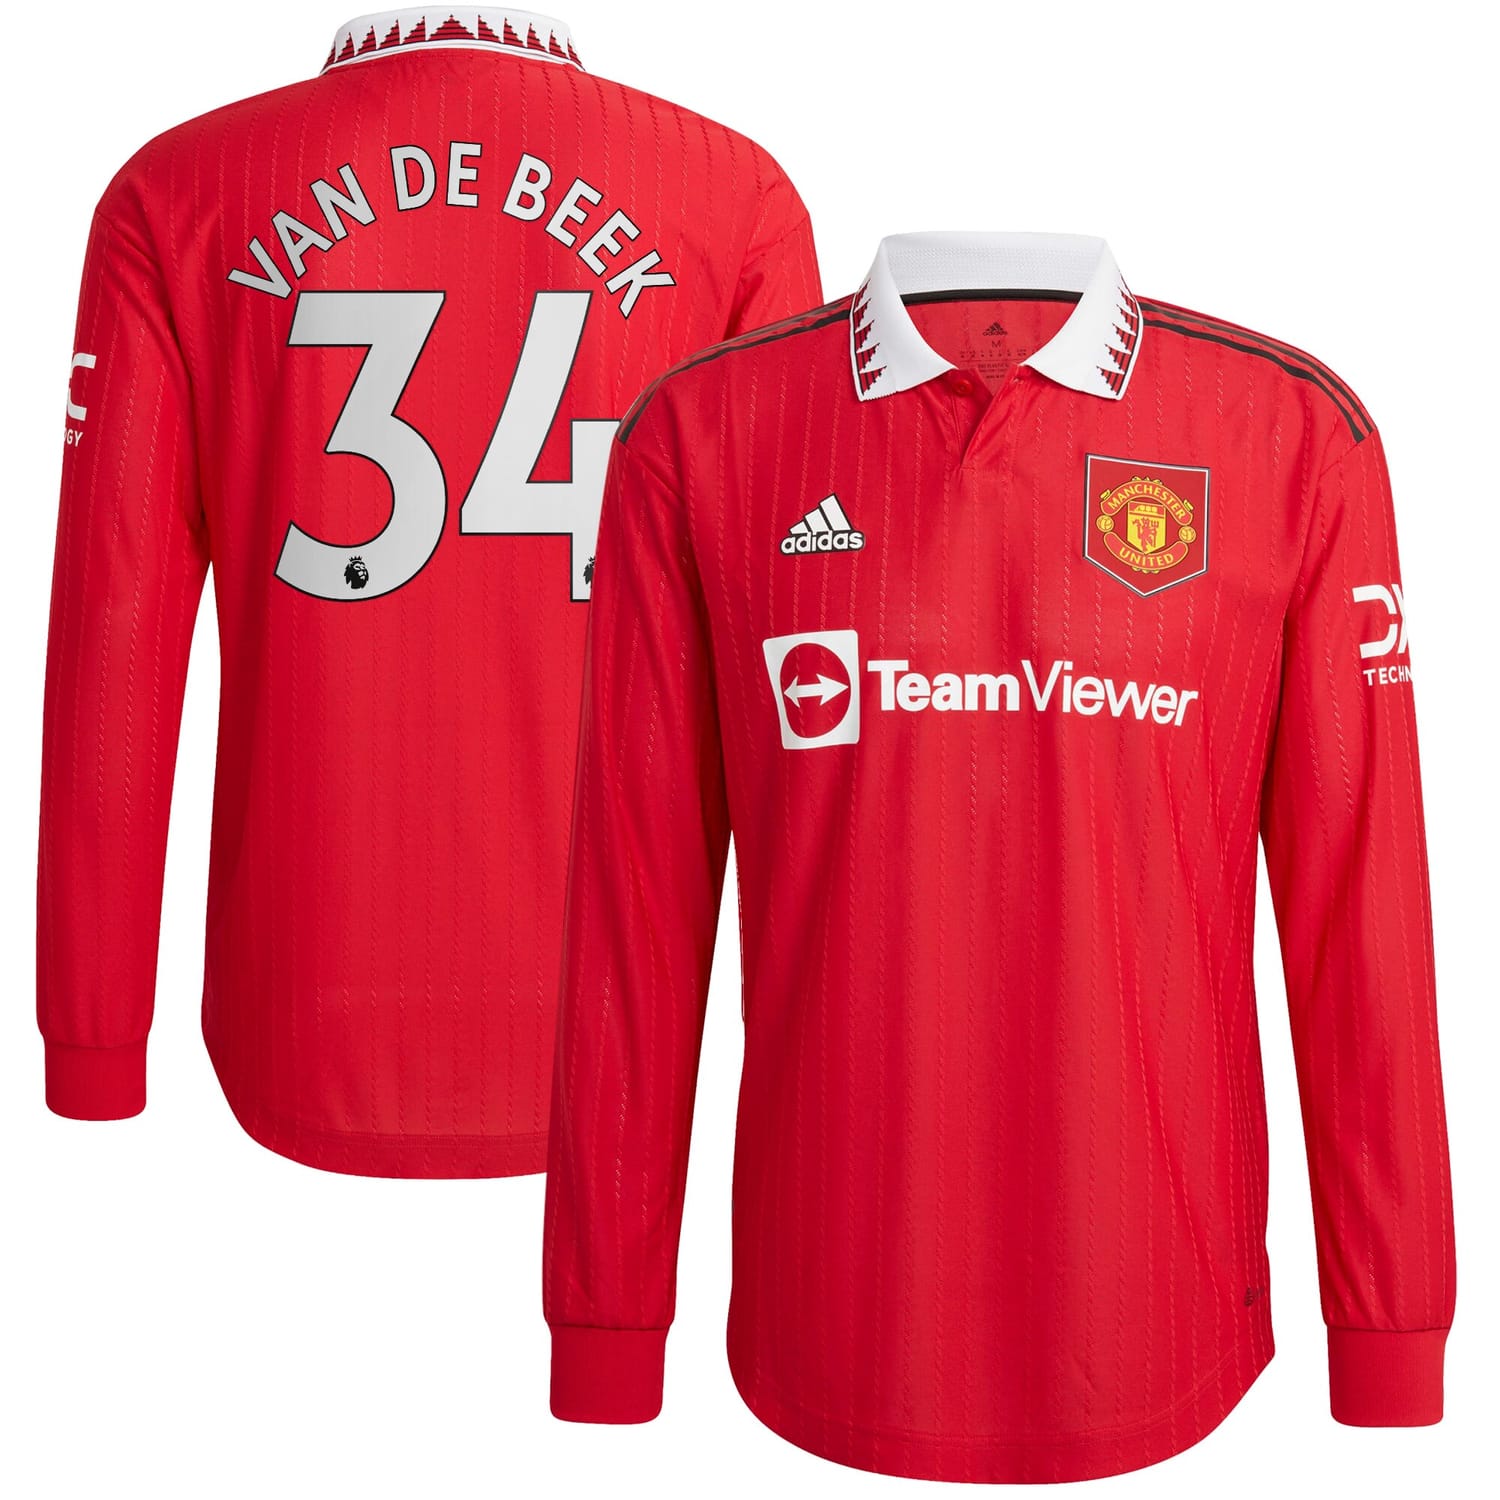 Premier League Manchester United Home Authentic Jersey Shirt Long Sleeve 2022-23 player Donny Van De Beek 34 printing for Men